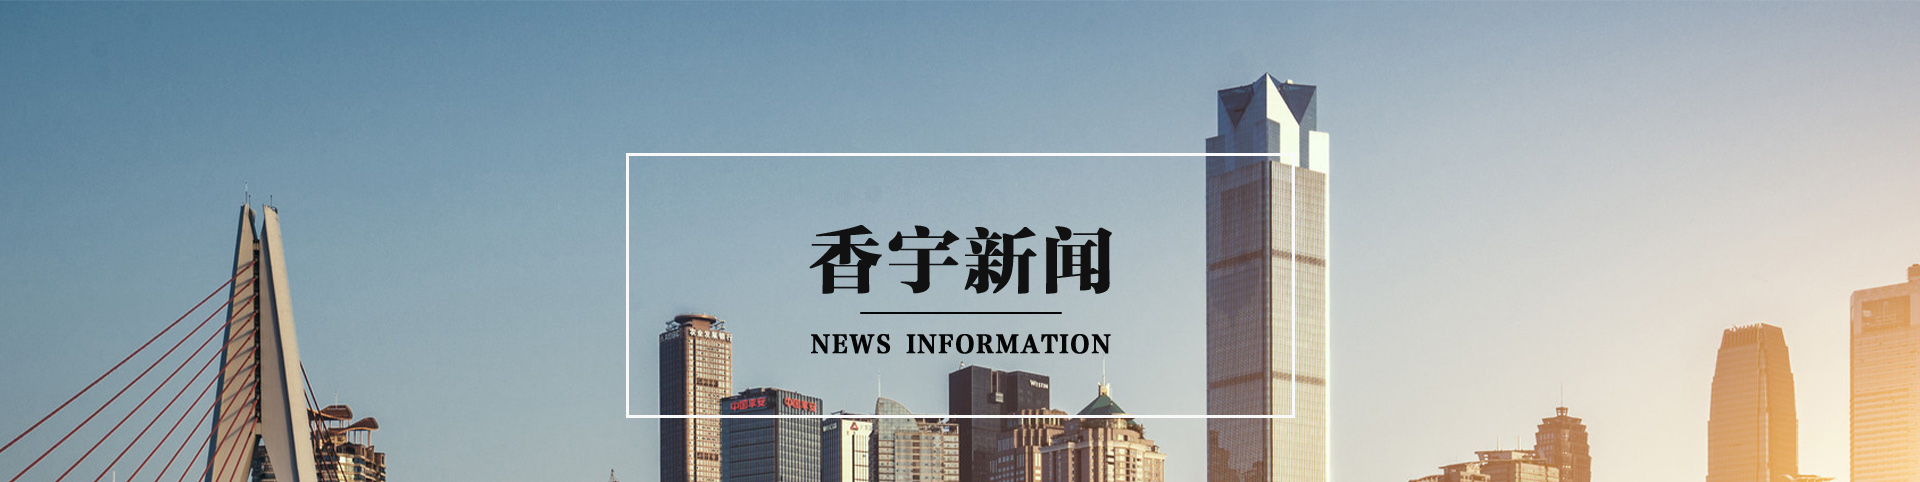 【48812】QMYCHX 0001-2015 北京百世醇香工贸有限公司 肉灌肠